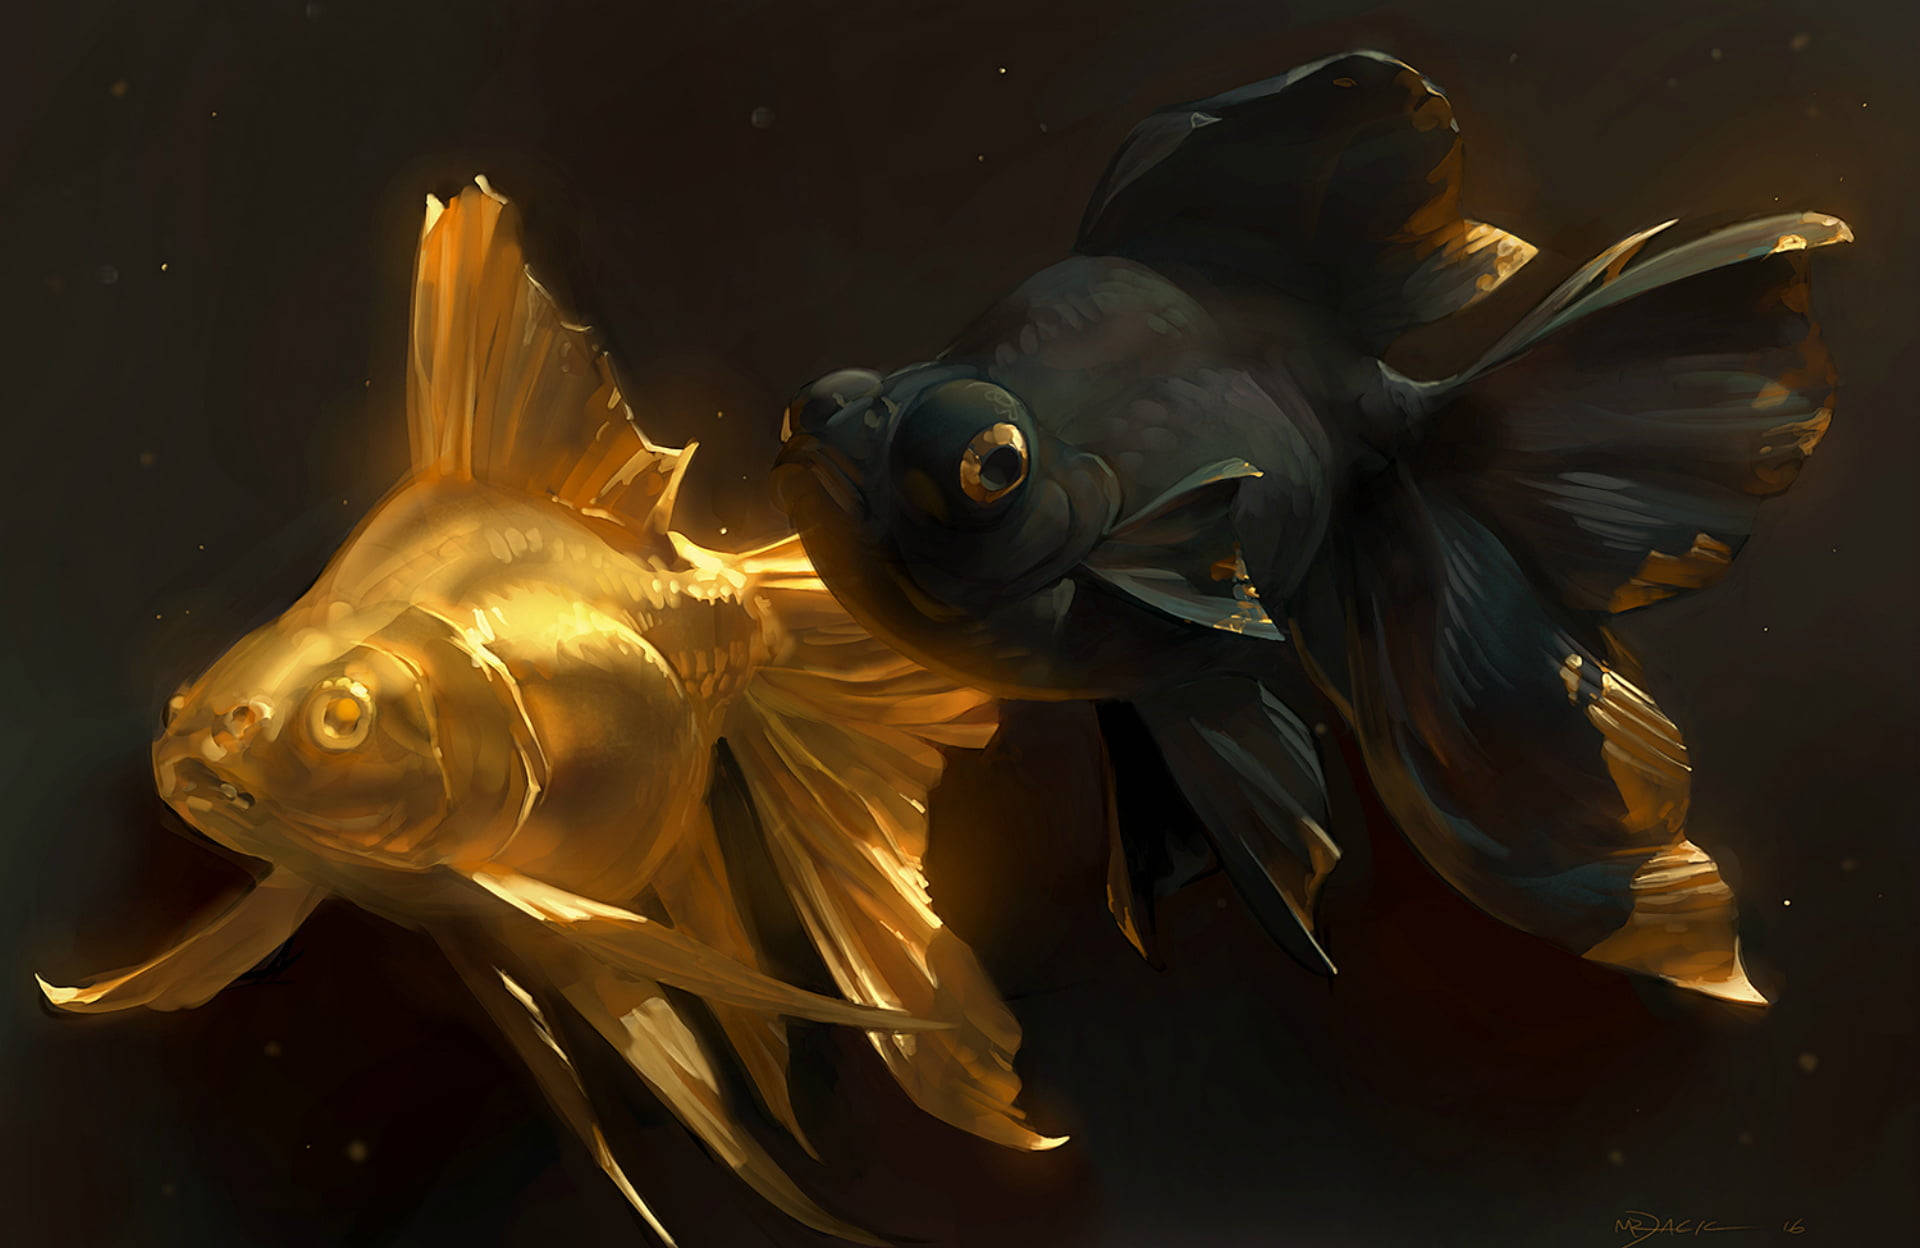 Black And Golden Koi Fish Background